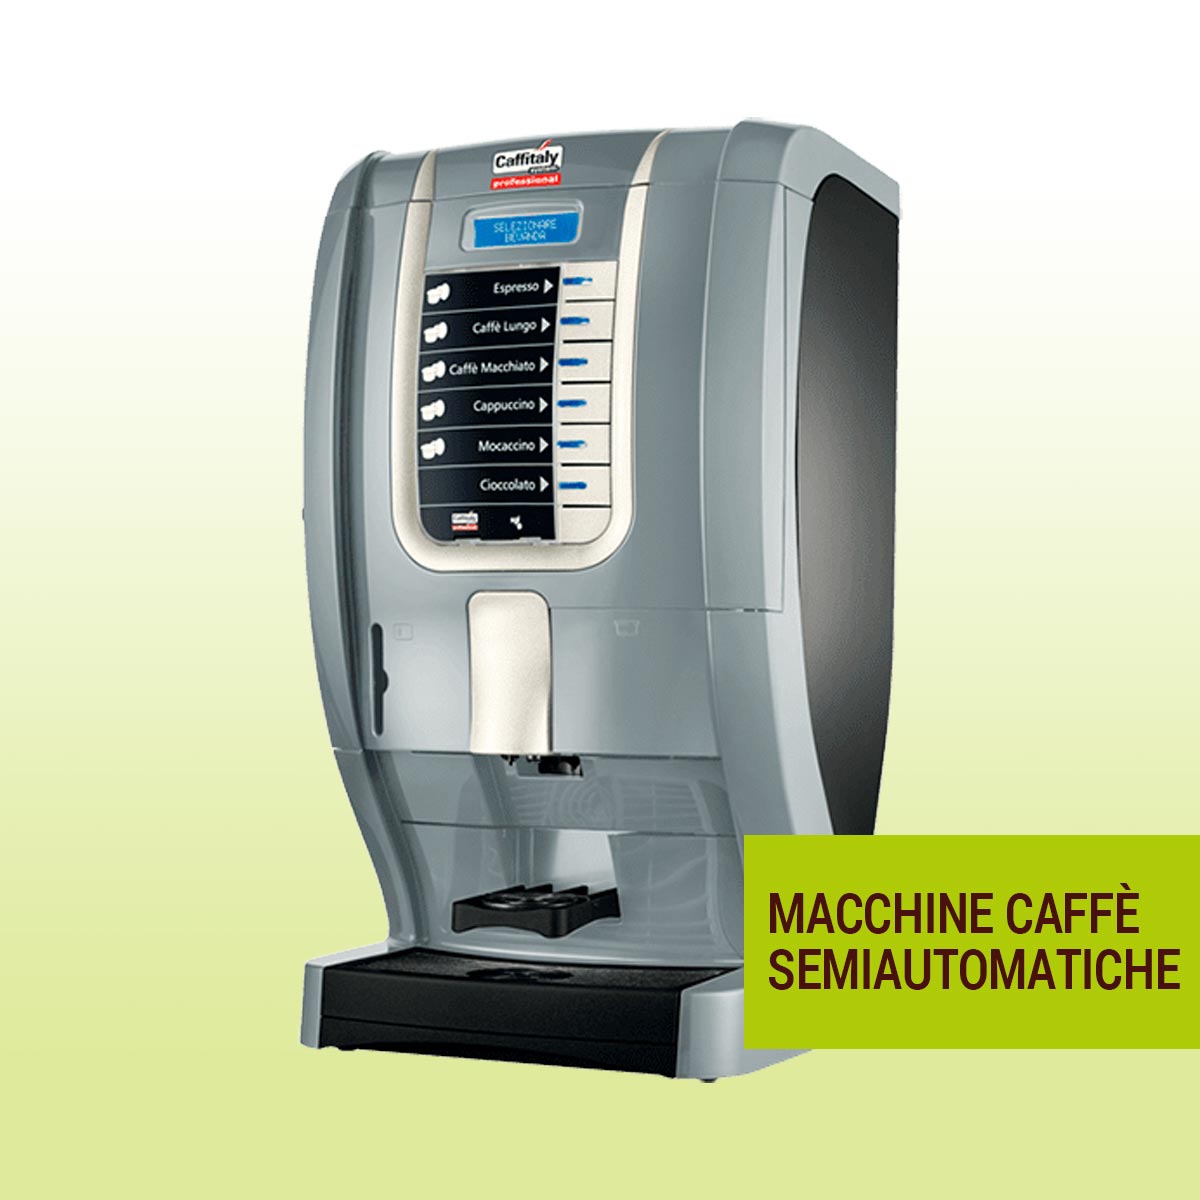 Macchine caffè semiautomatiche per aziende